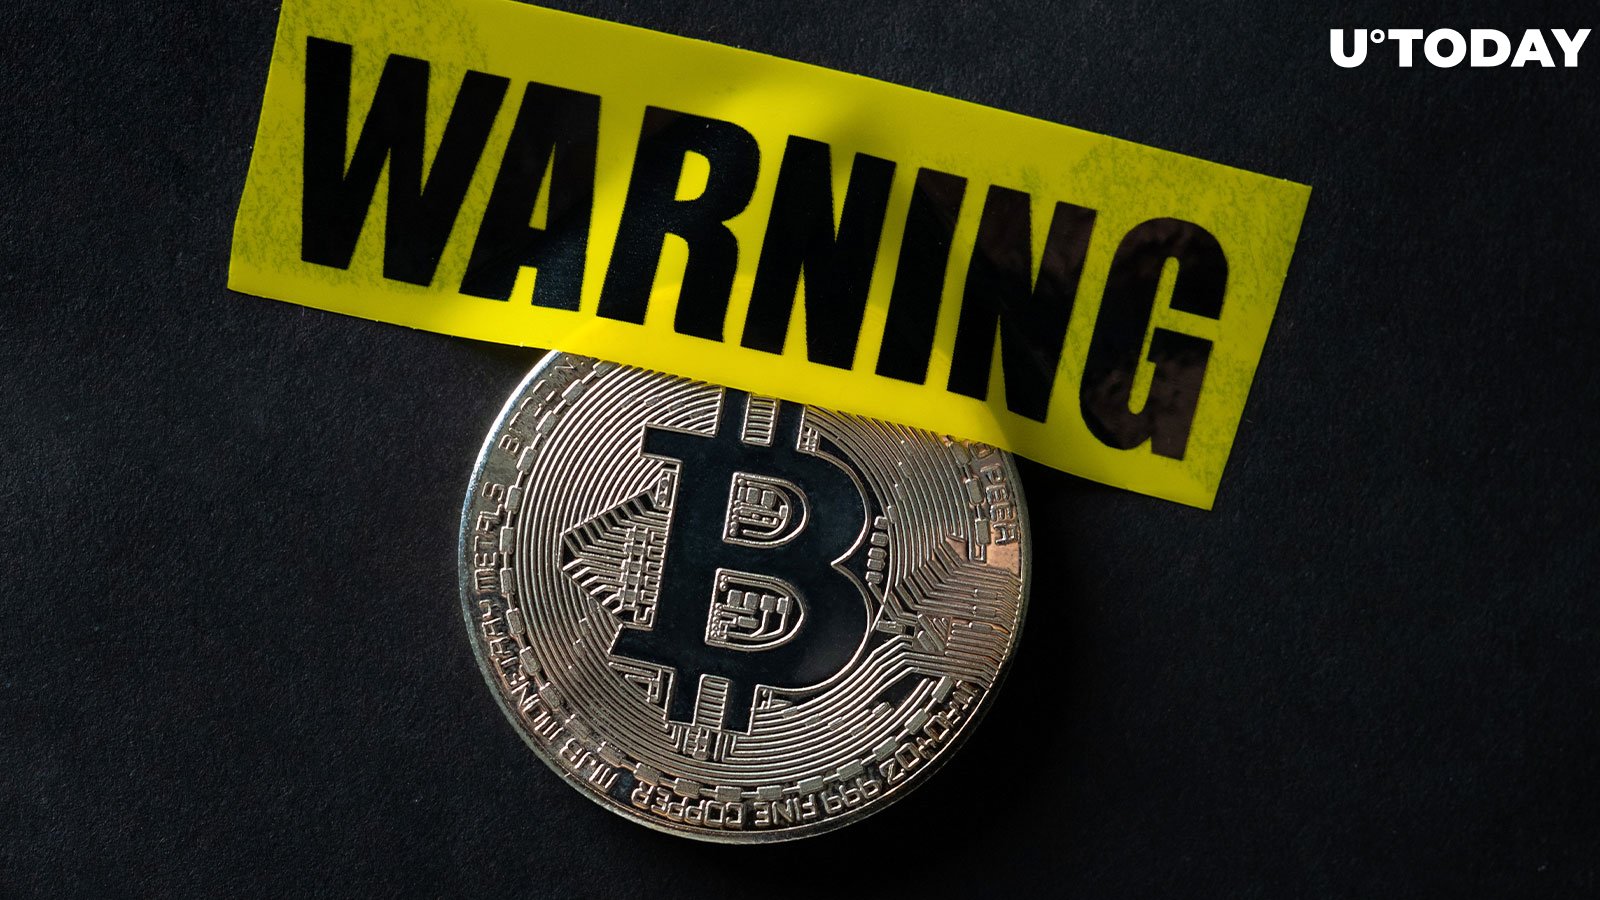 Bitcoin (BTC) Receives Massive Warning as SHA-256 Collision Raises Questions